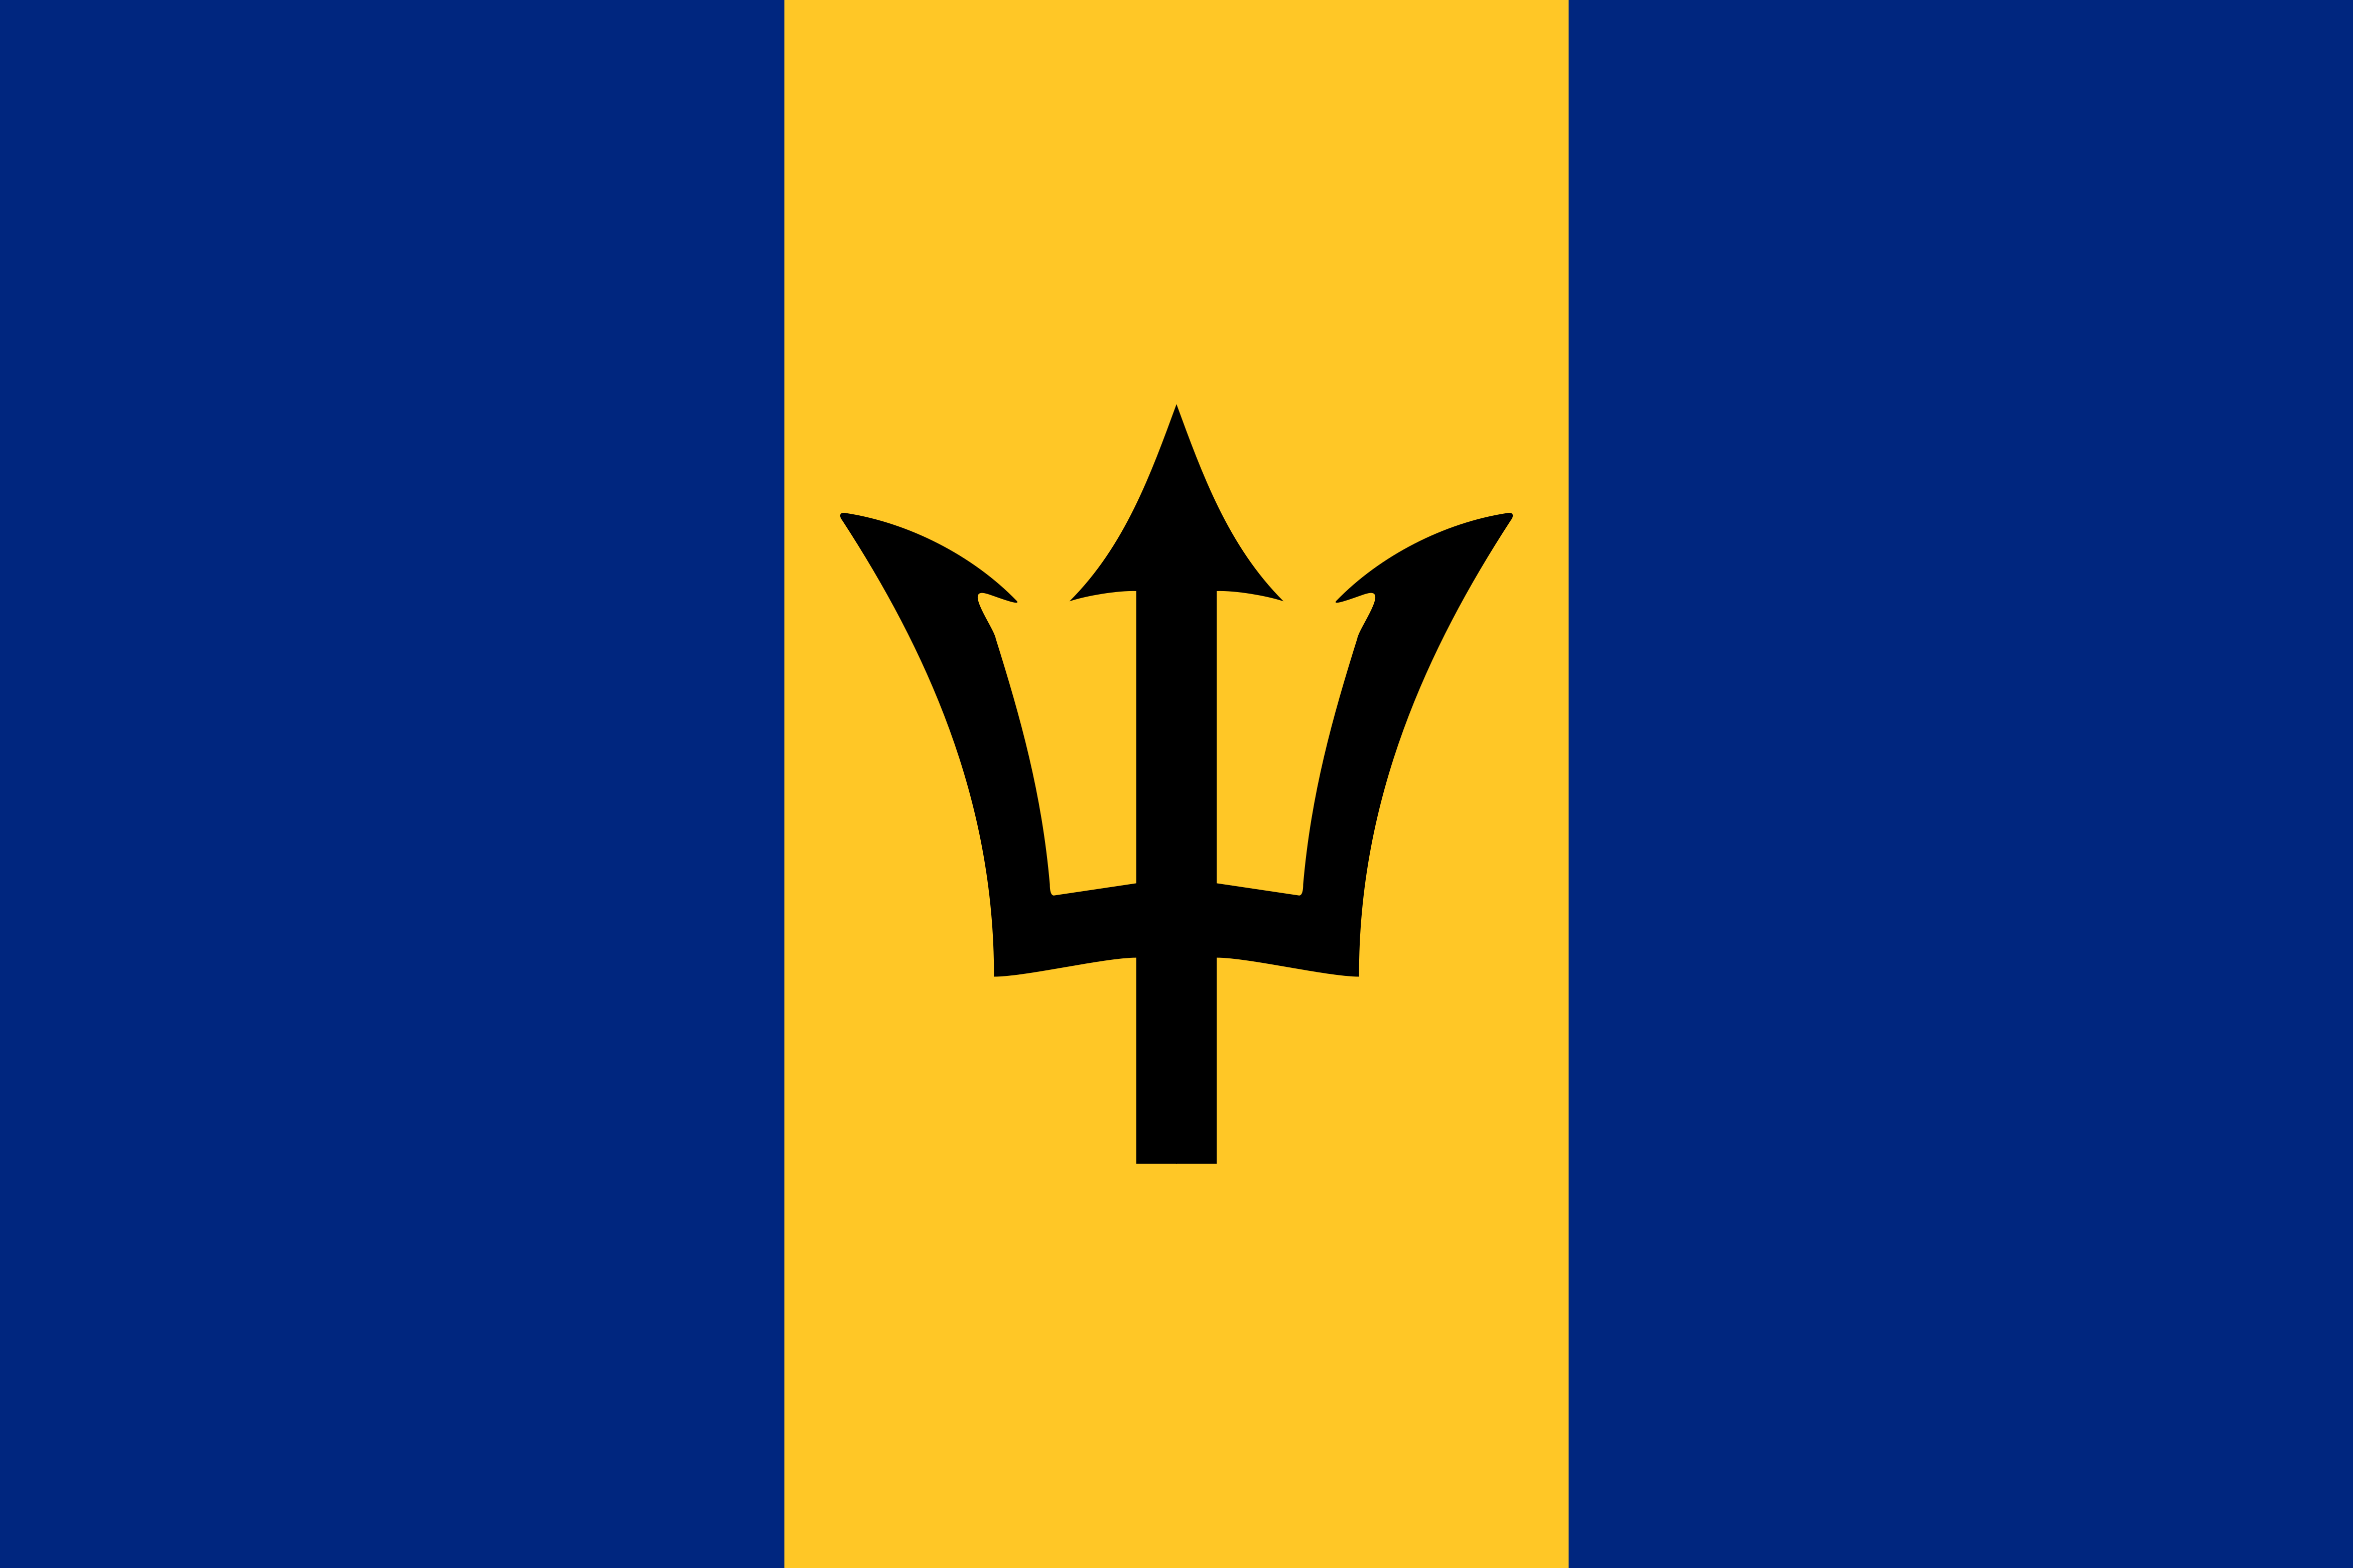 Free Barbados Flag Documents: PDF, DOC, DOCX, HTML & More!